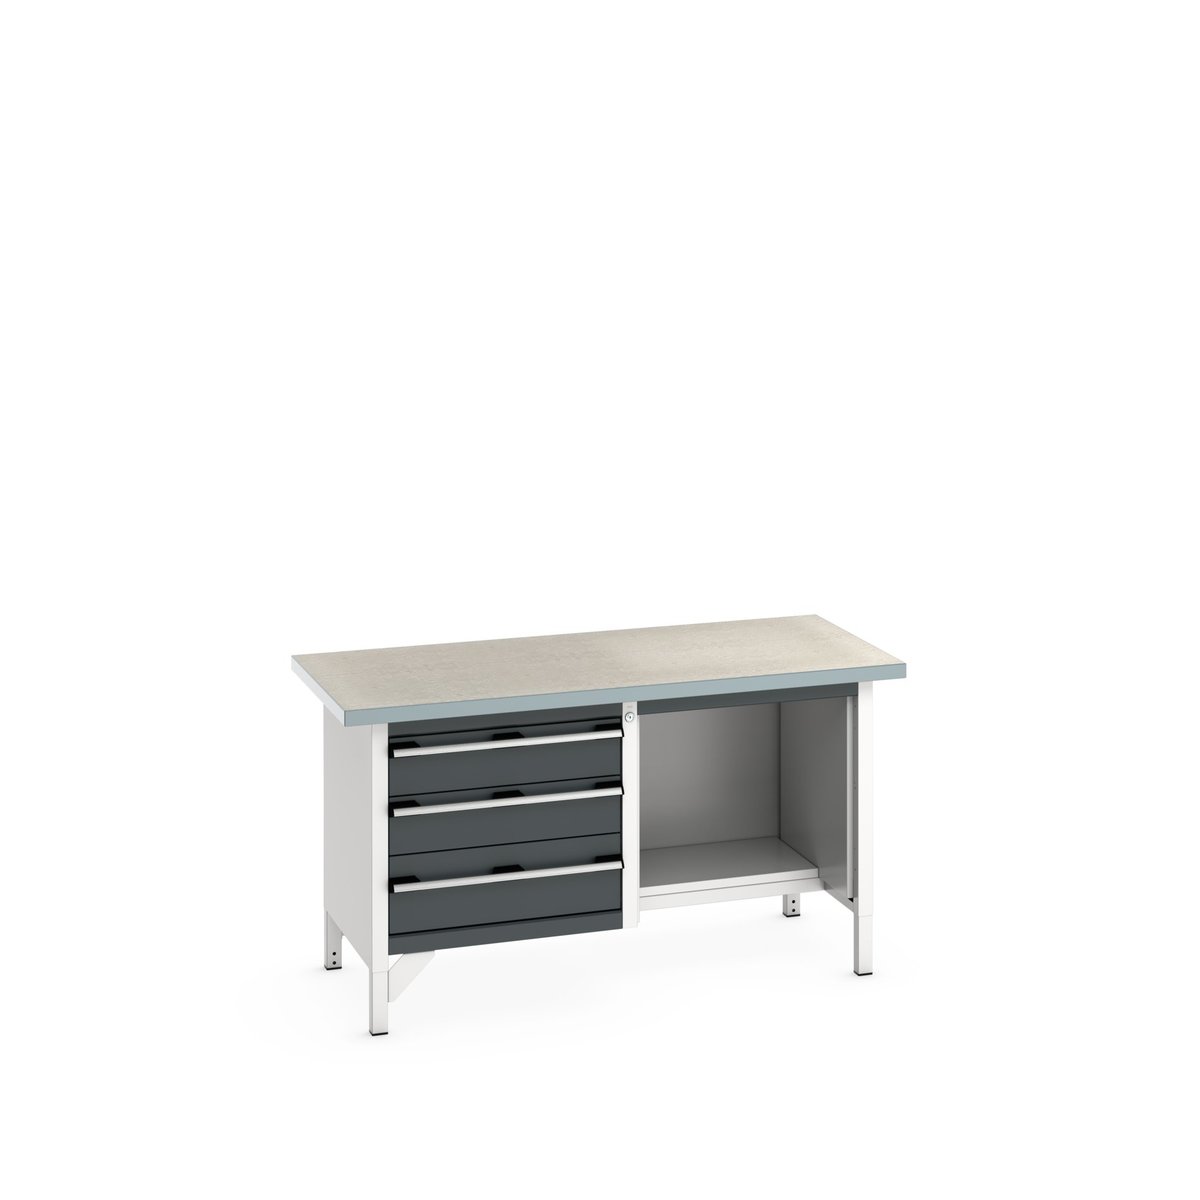 41002042. - cubio storage bench (lino)